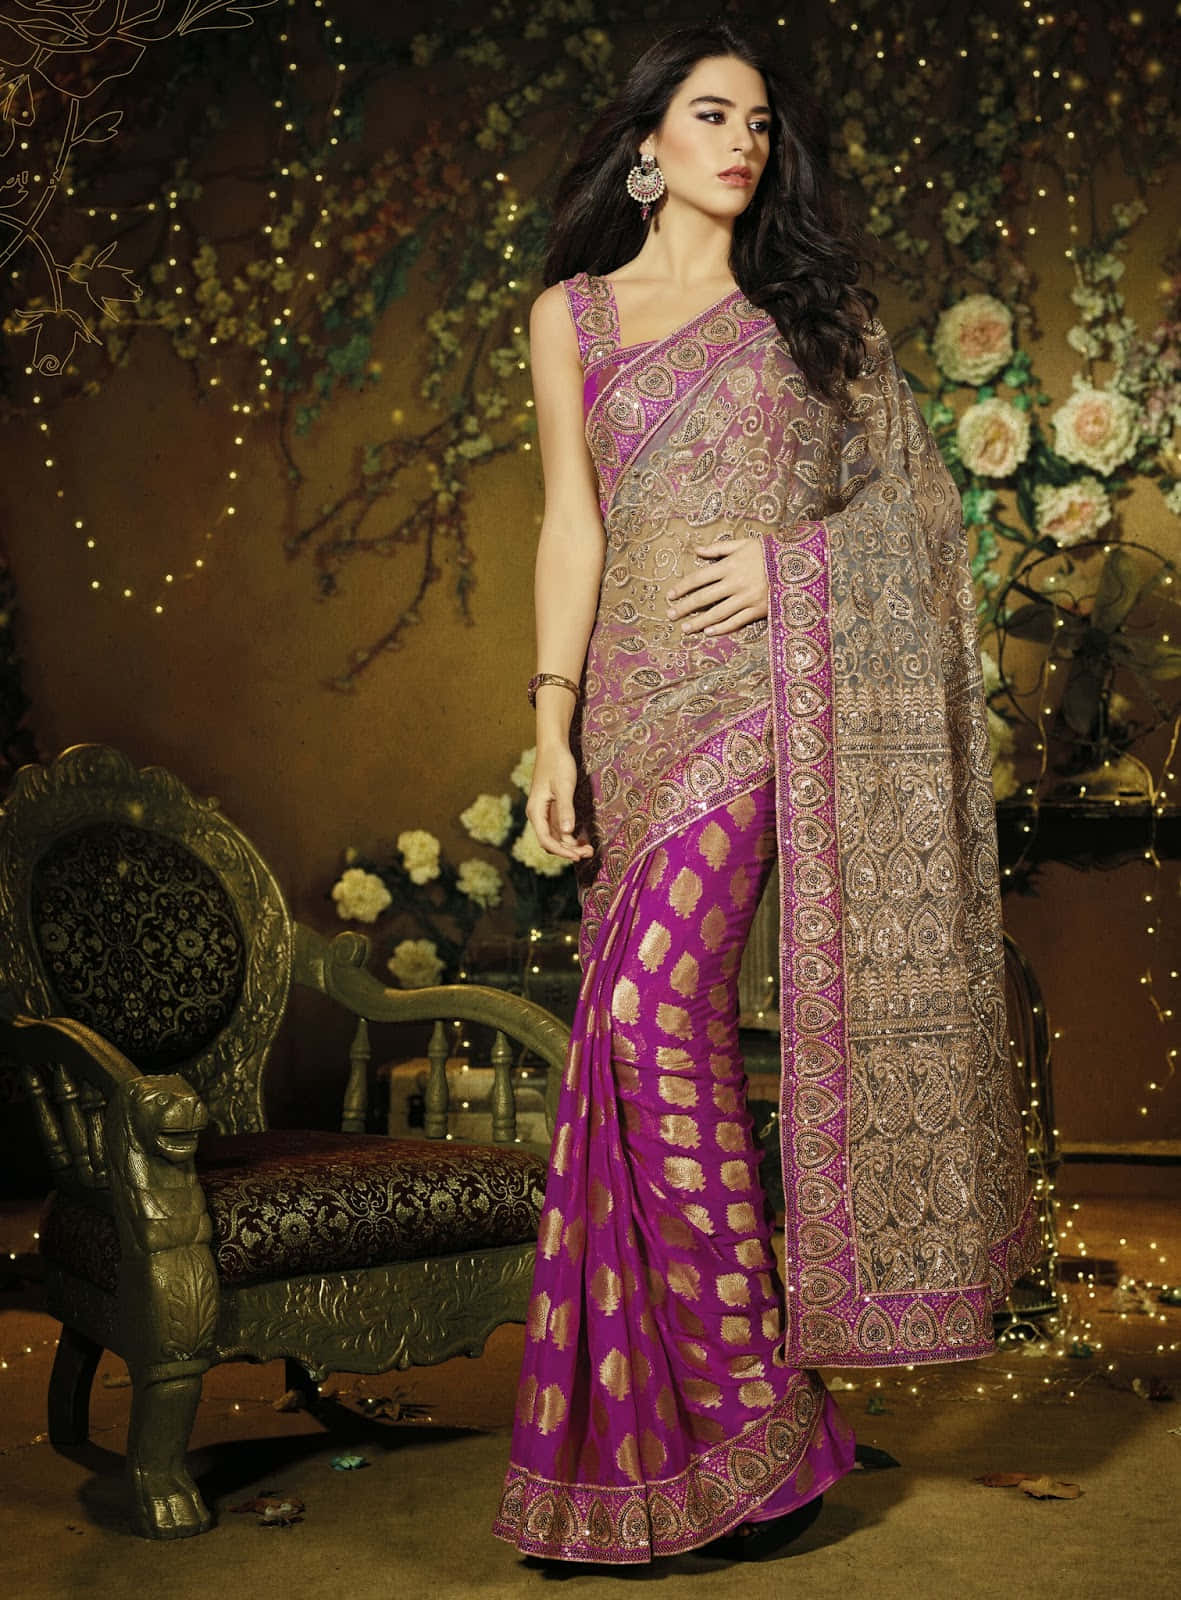 A Beautiful Woman In A Purple And Grey Sari